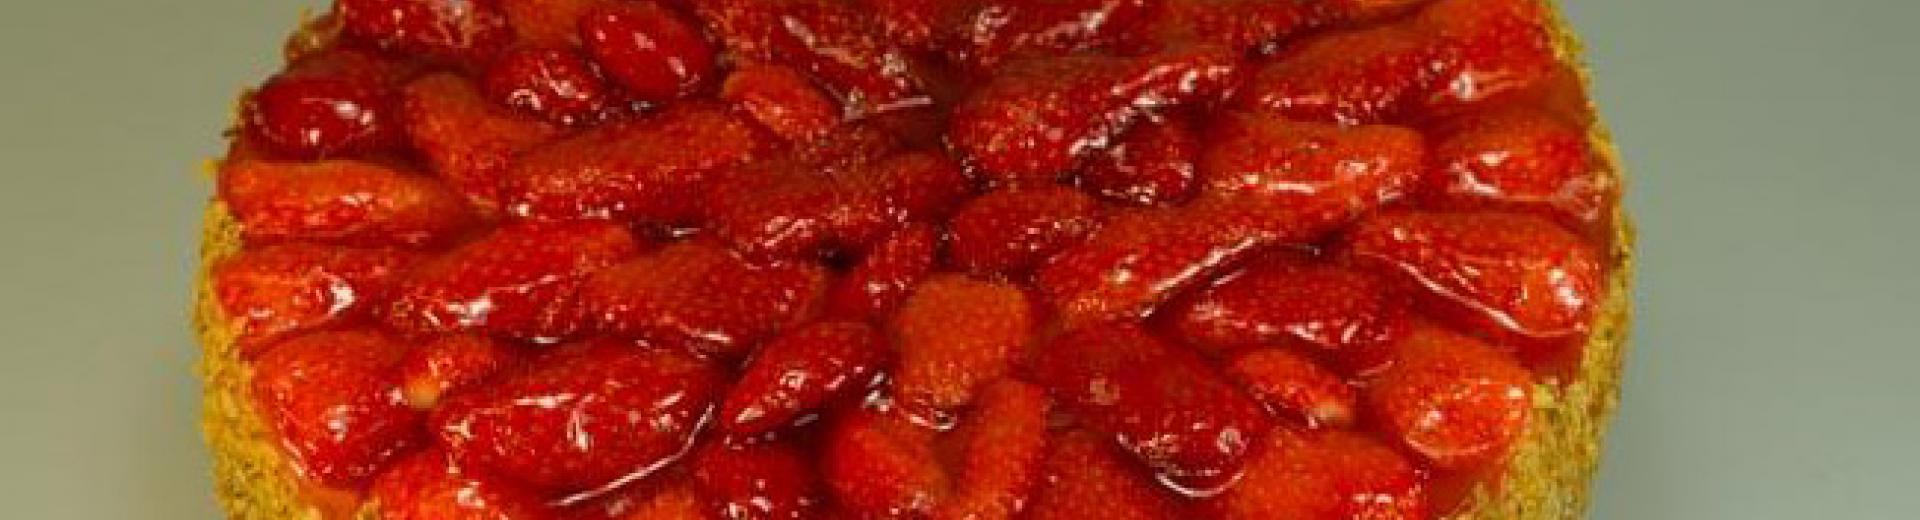 Tarte aux fraises BIO